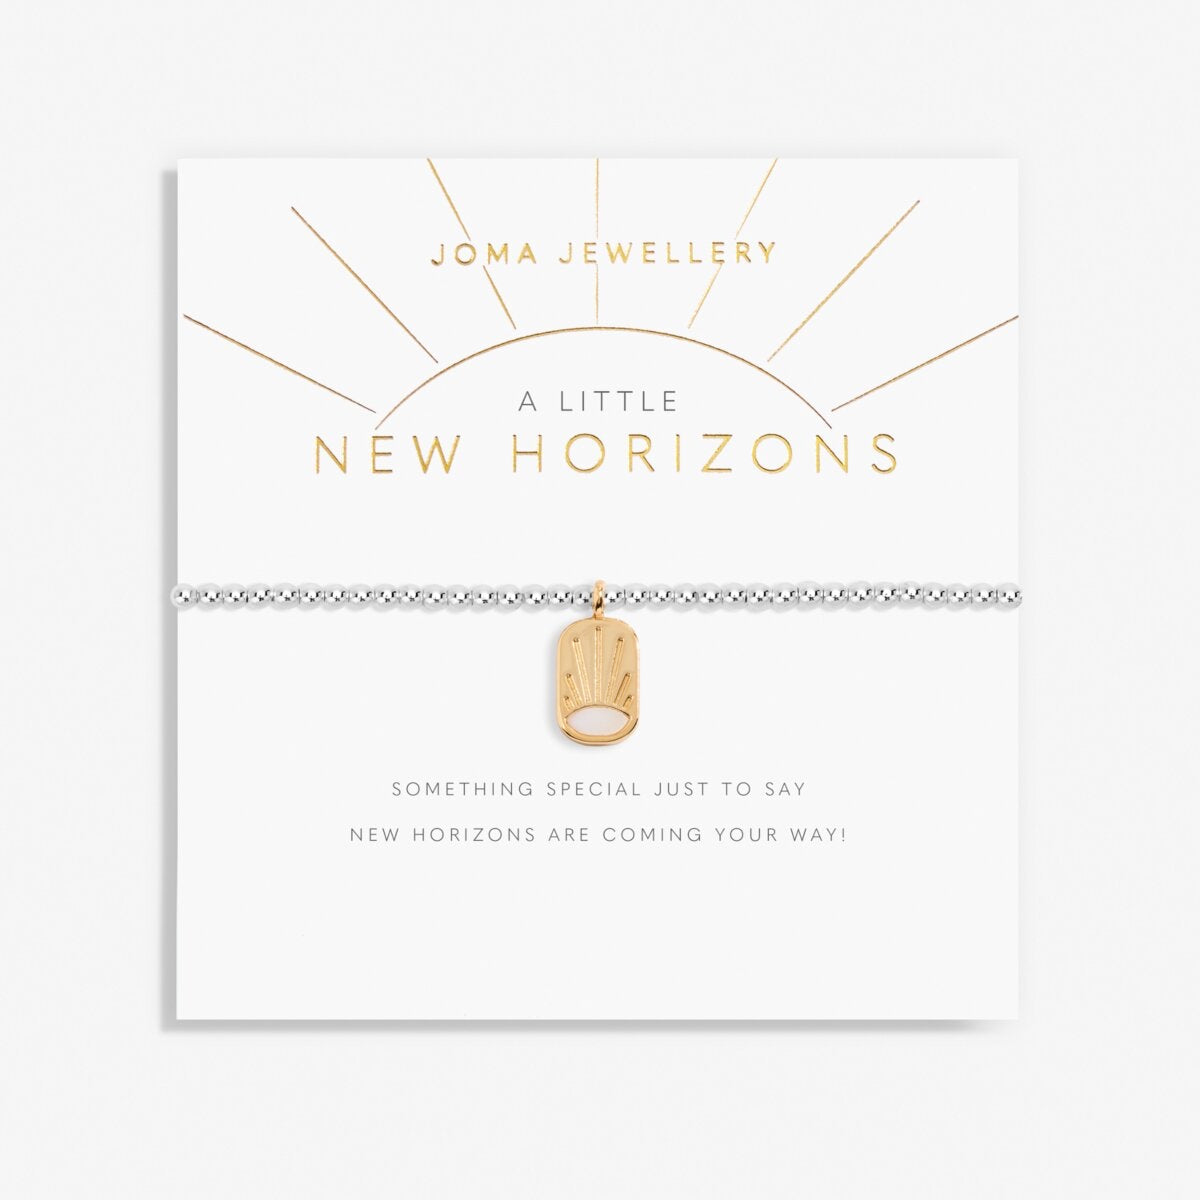 Joma Jewellery 'A Little' New Horizons